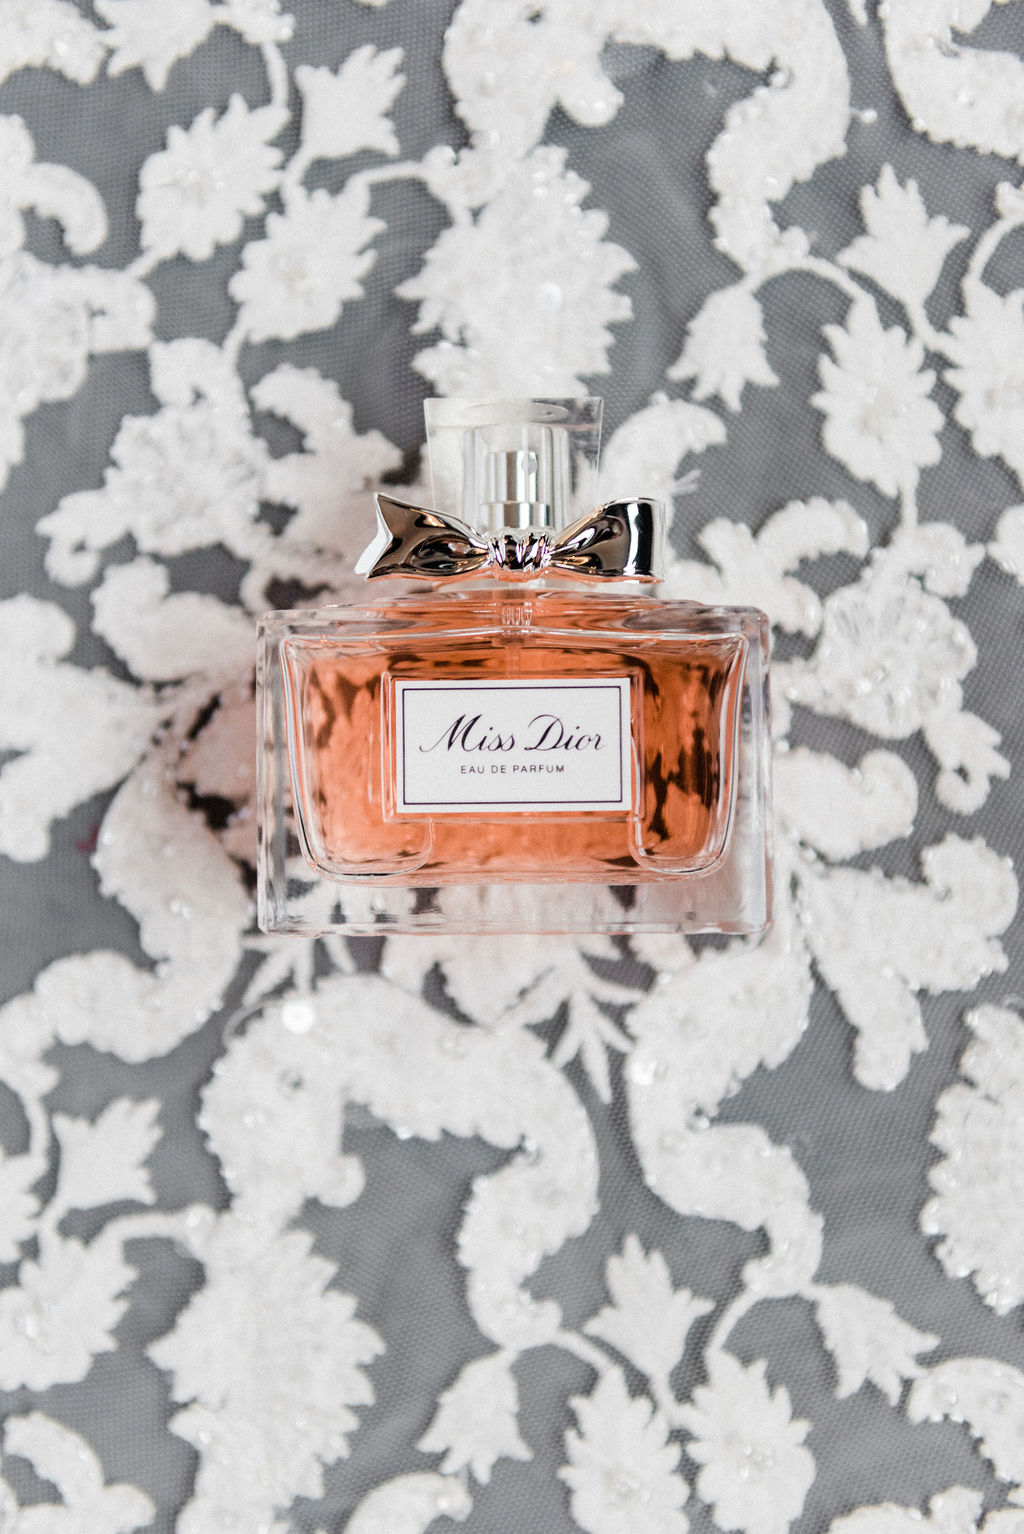 A bride's perfume